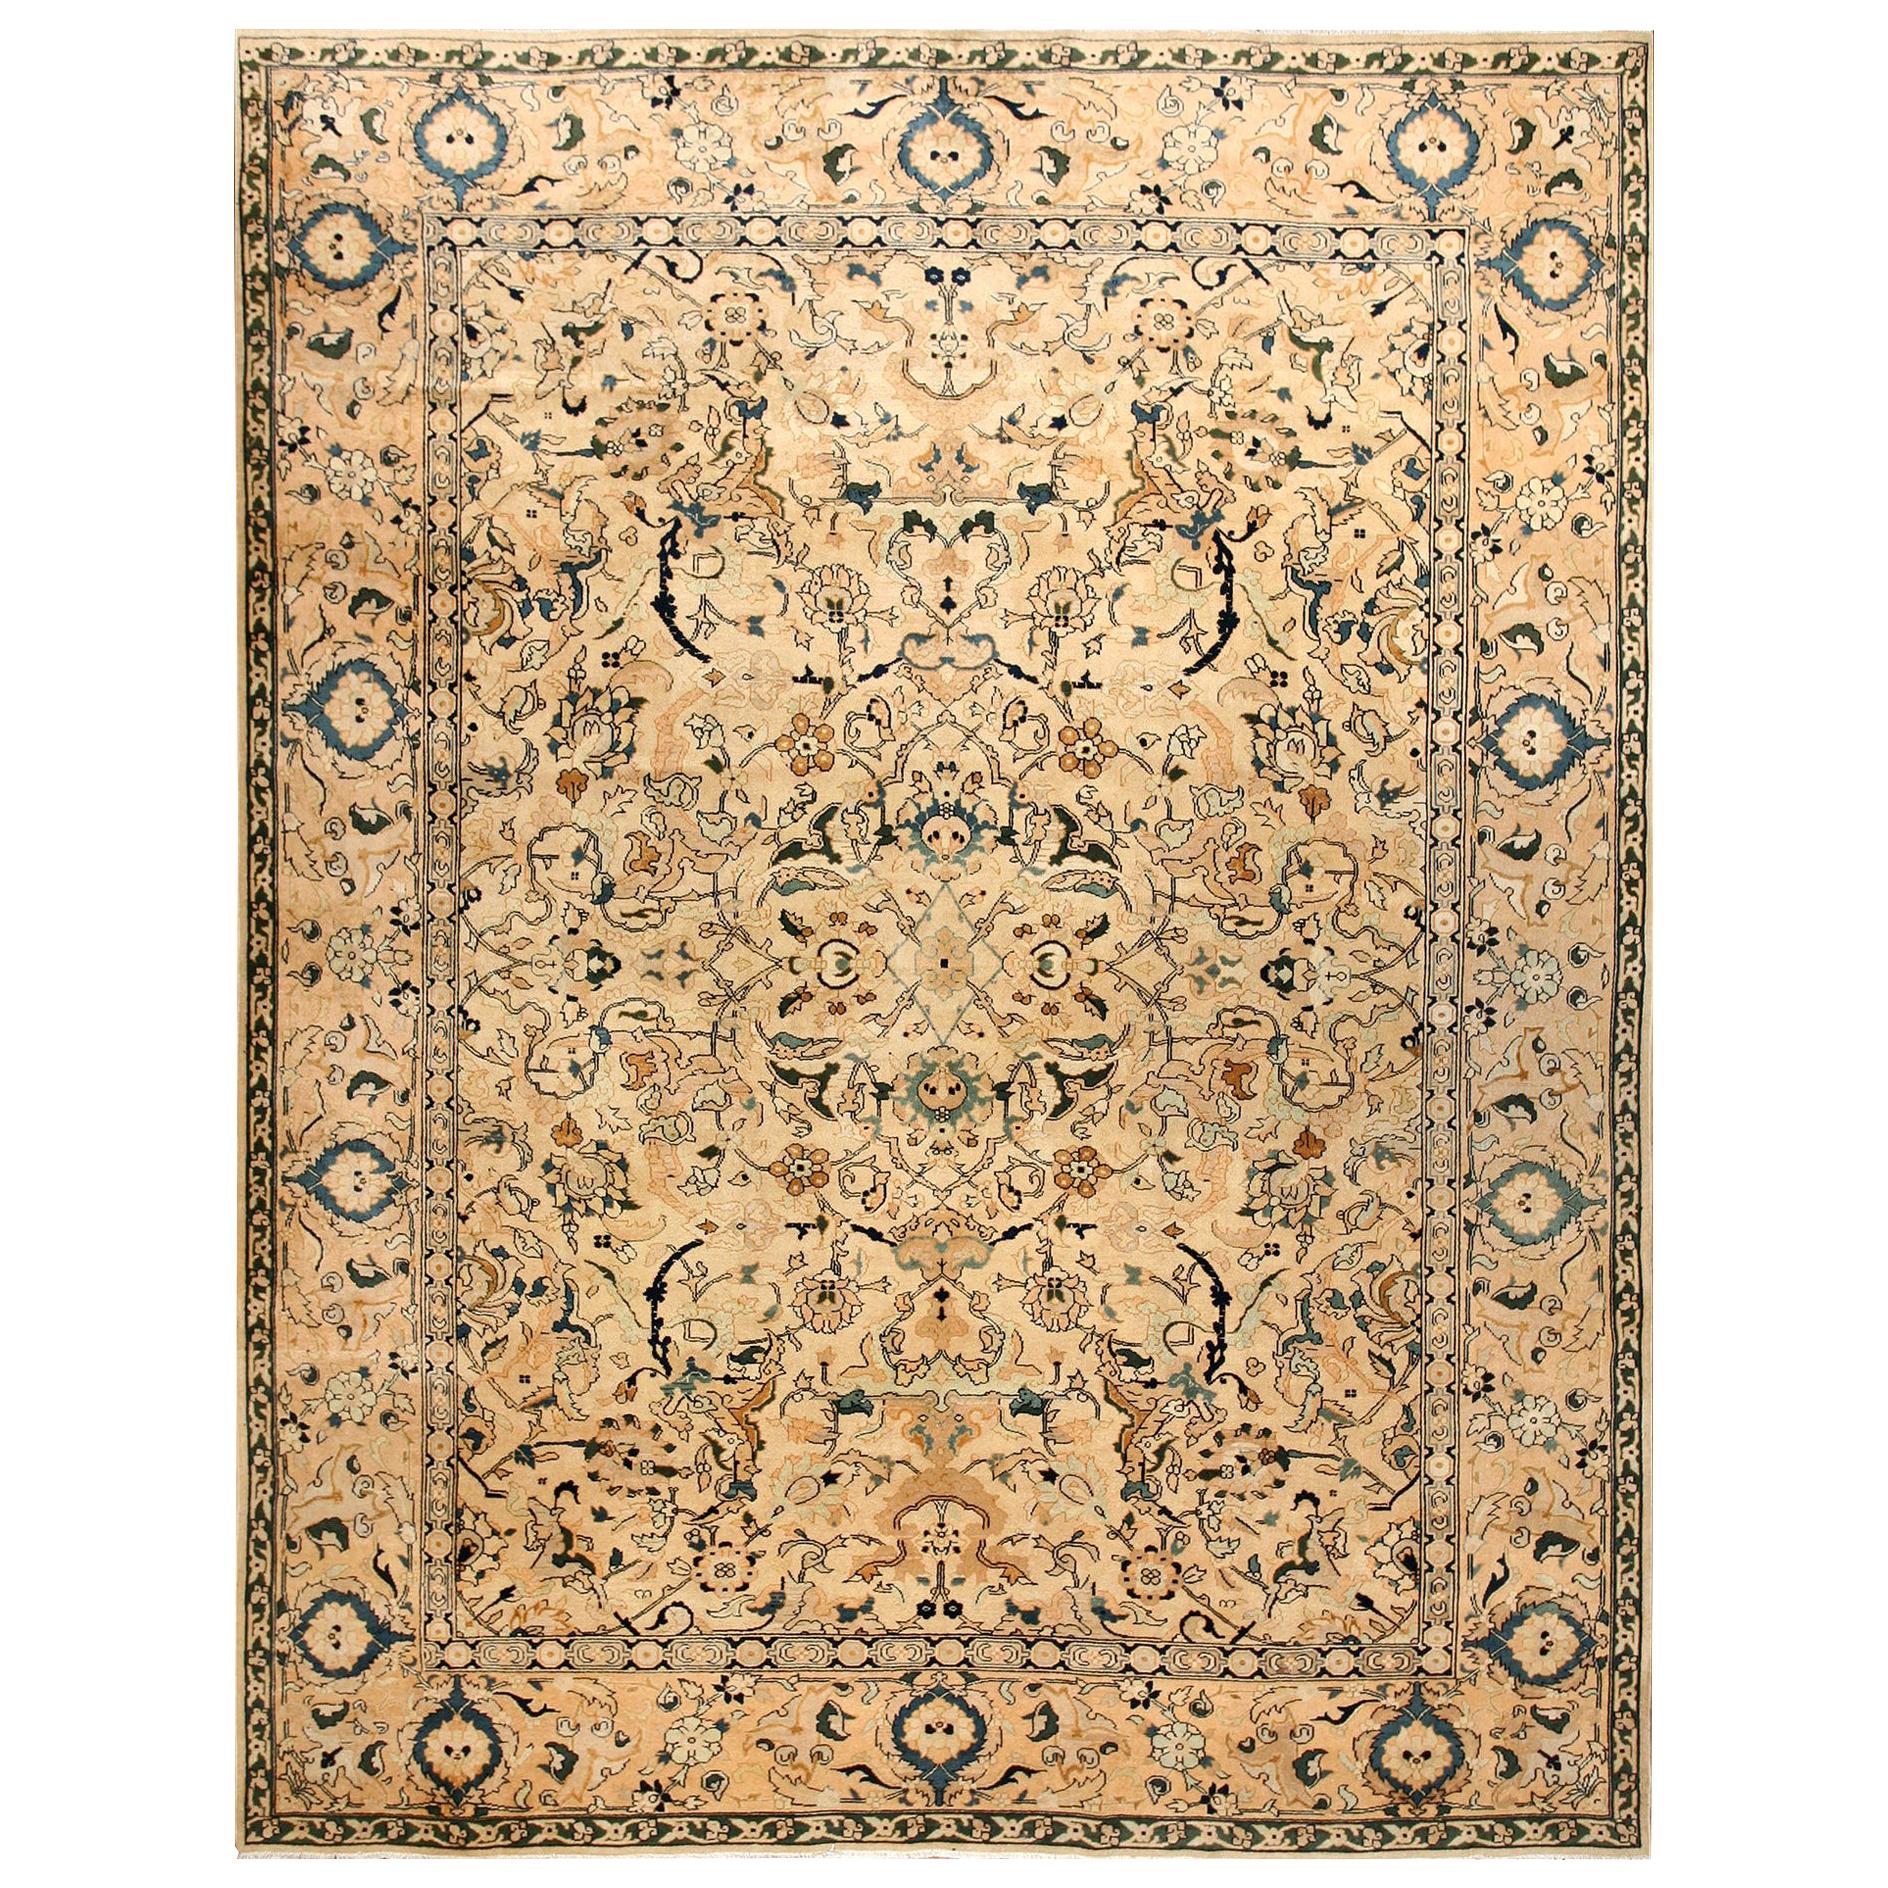 Early 20th Century N.W. Persian Tabriz Carpet ( 9' x 11'6" - 275 x 350 ) For Sale